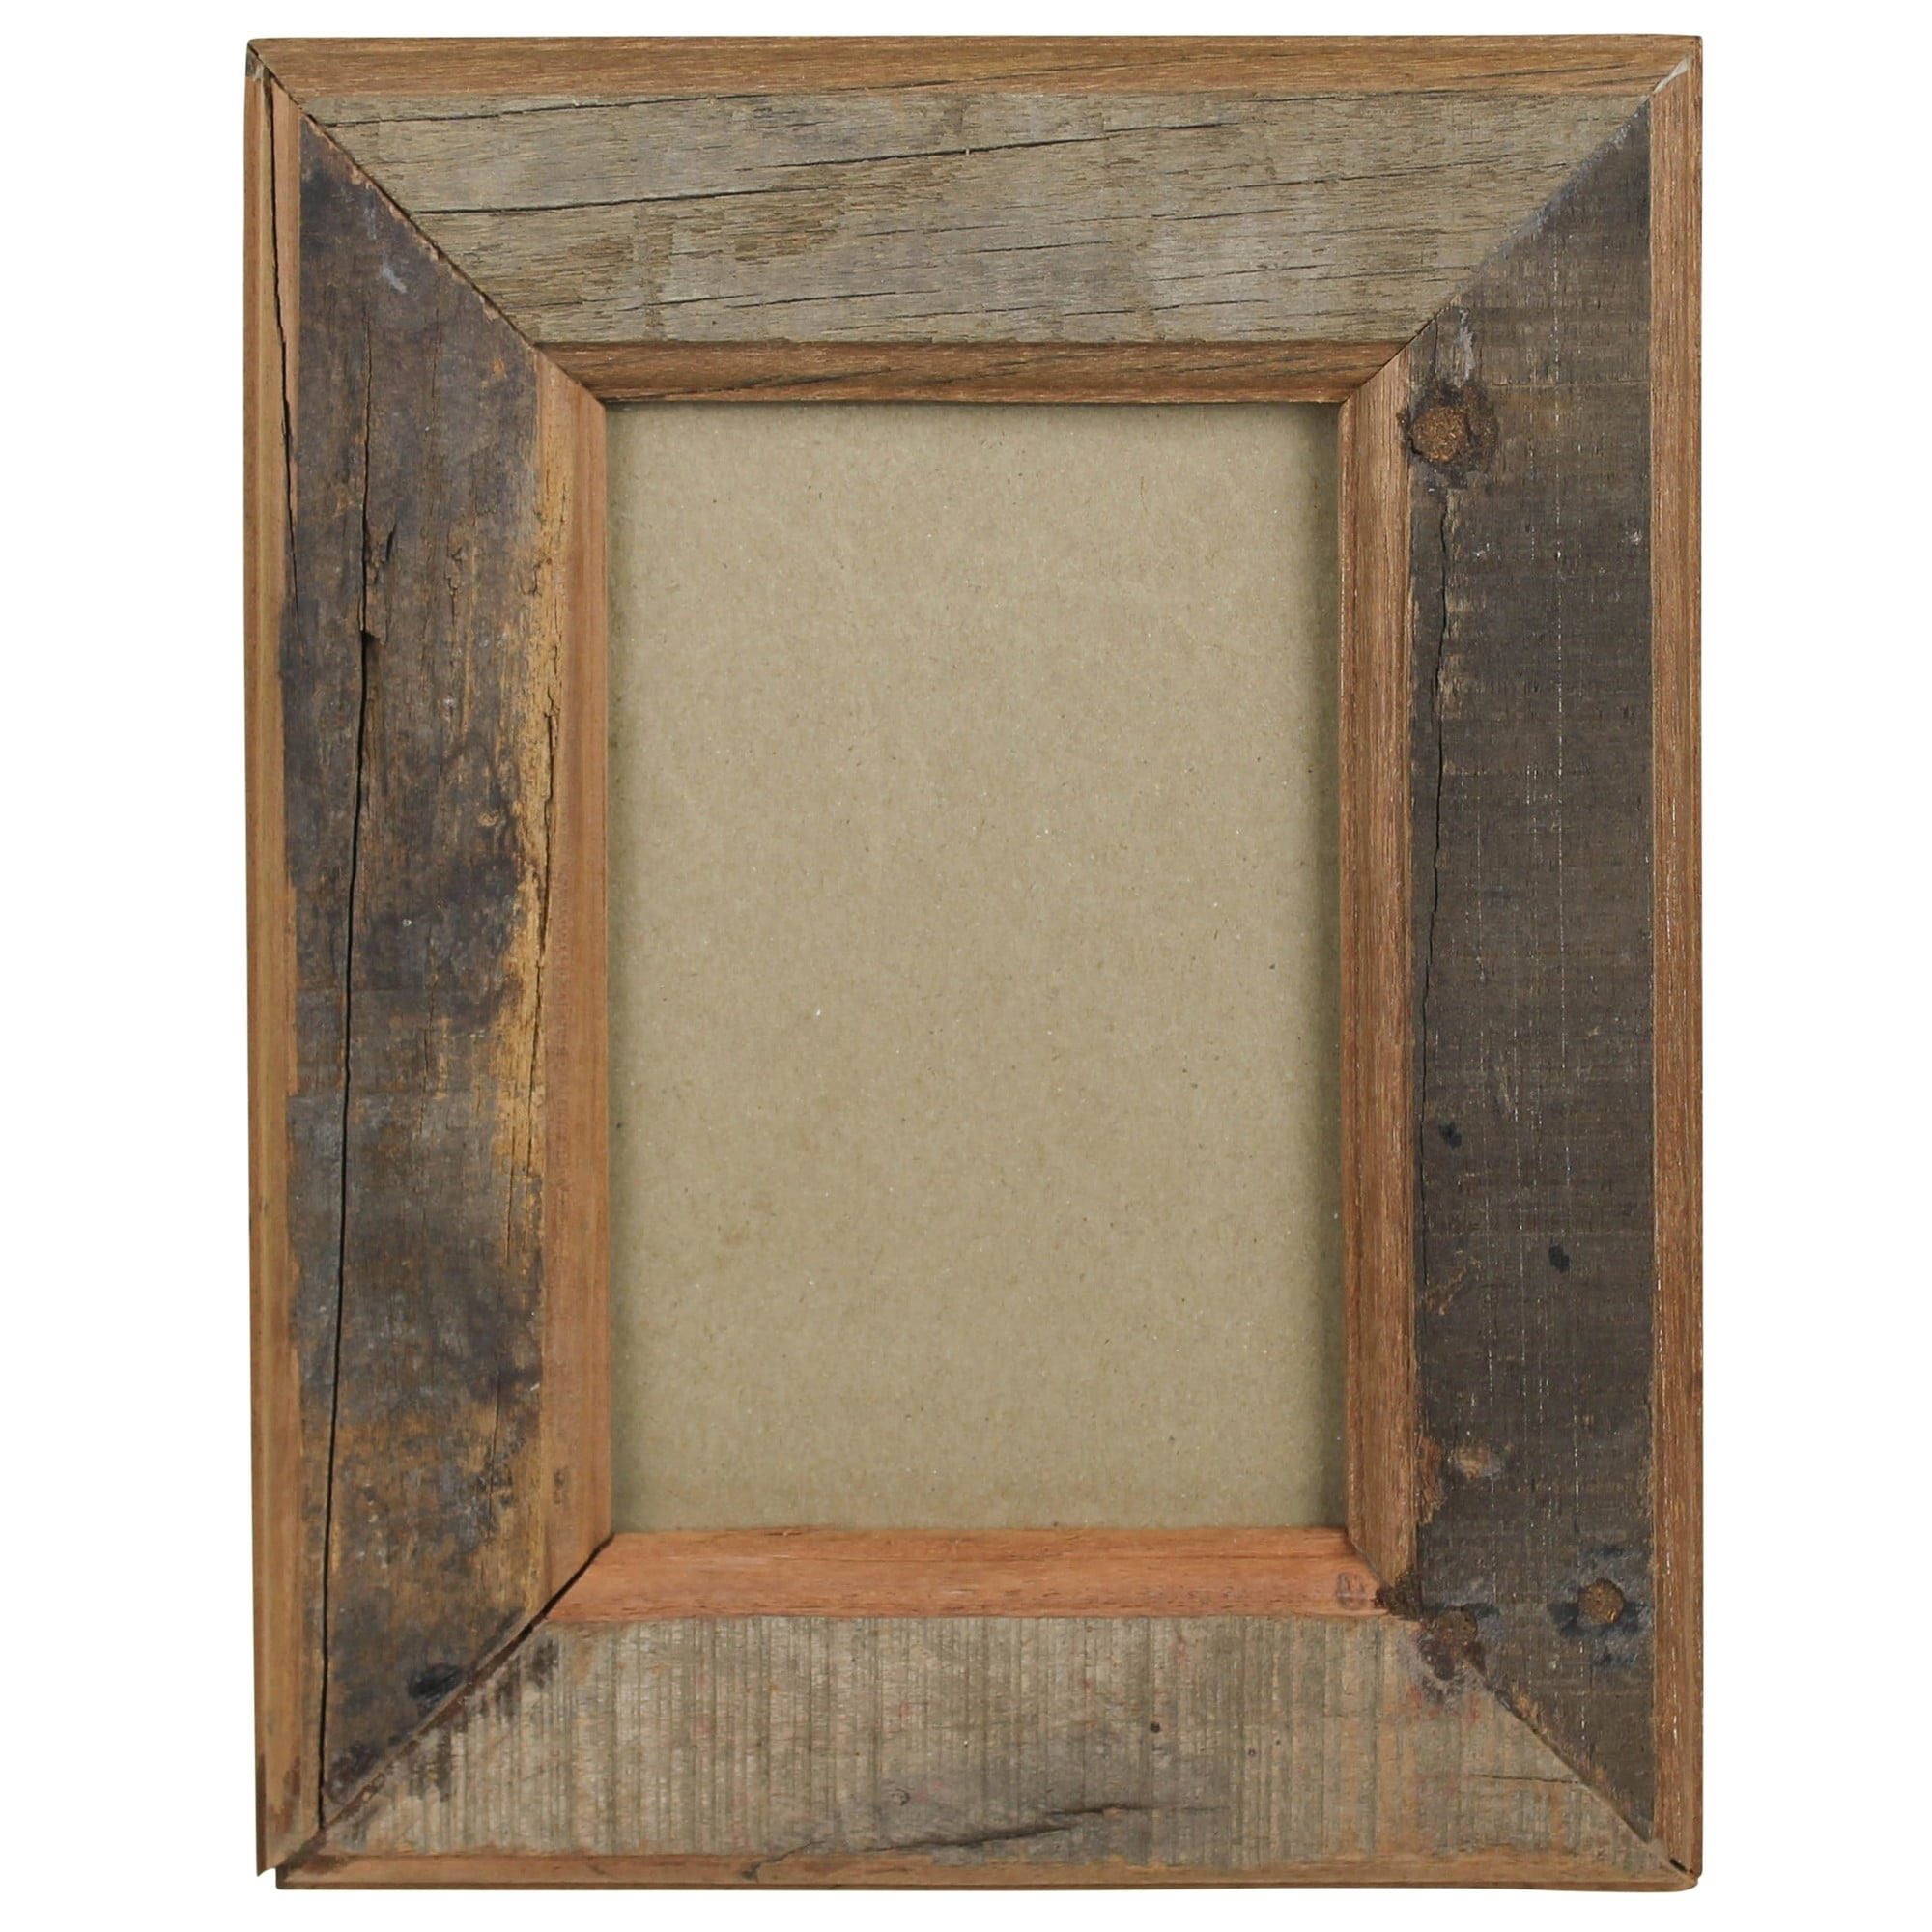 Shabby Chic Rustic Wood Grain Picture Frame Photo Frame Decor Black White Walnut 